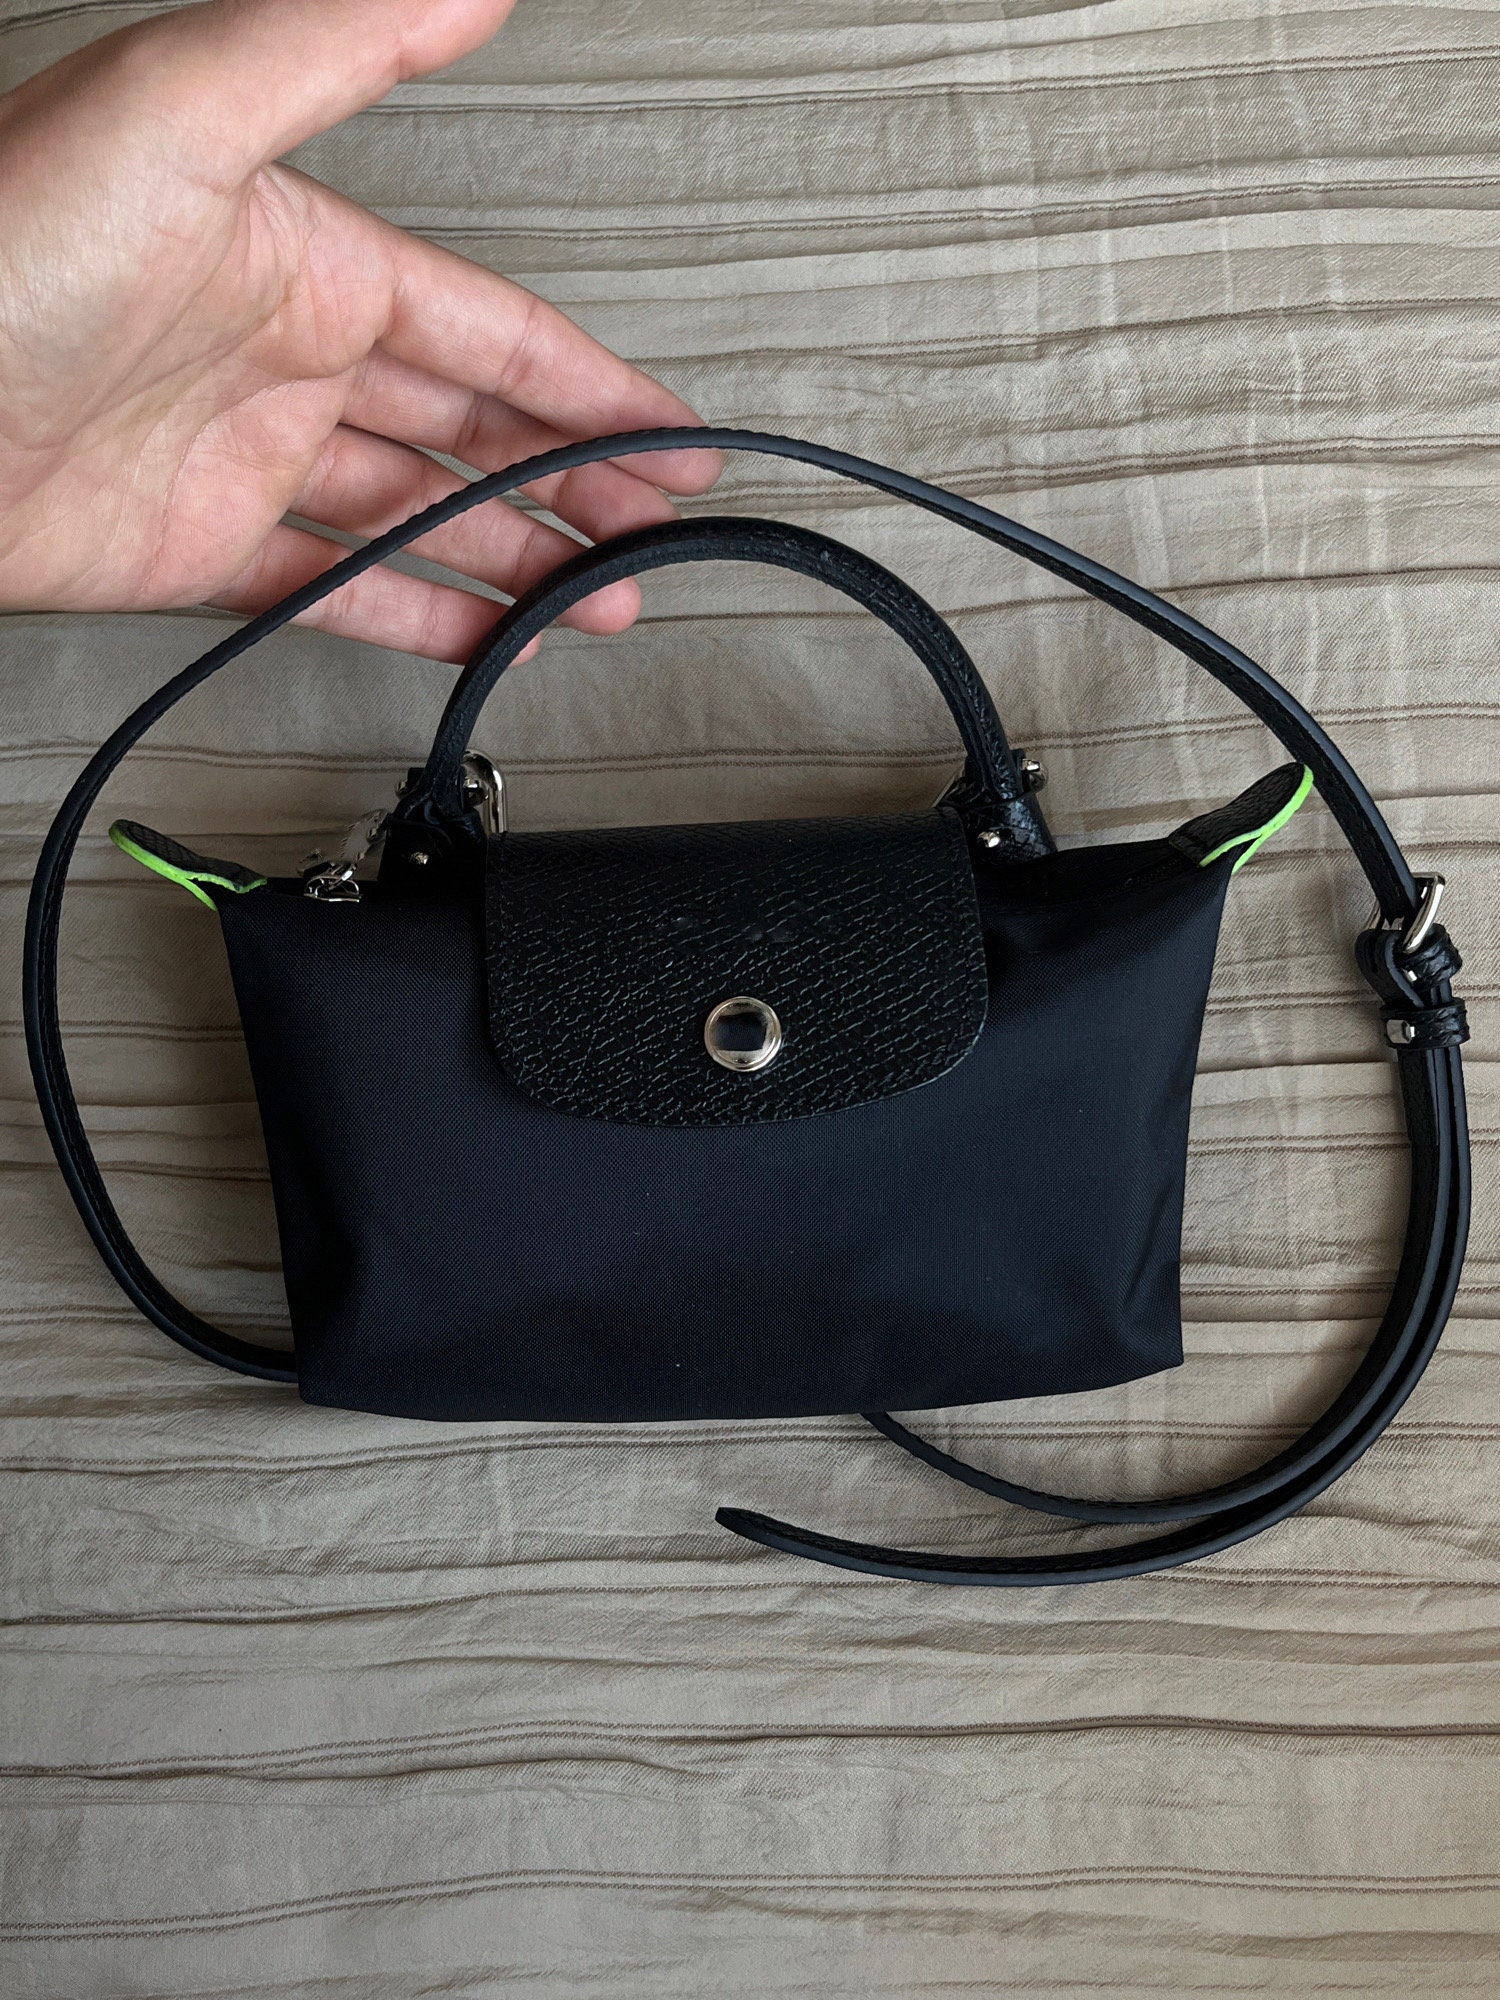 Le Pliage Neo Black Nylon Clutch Bag